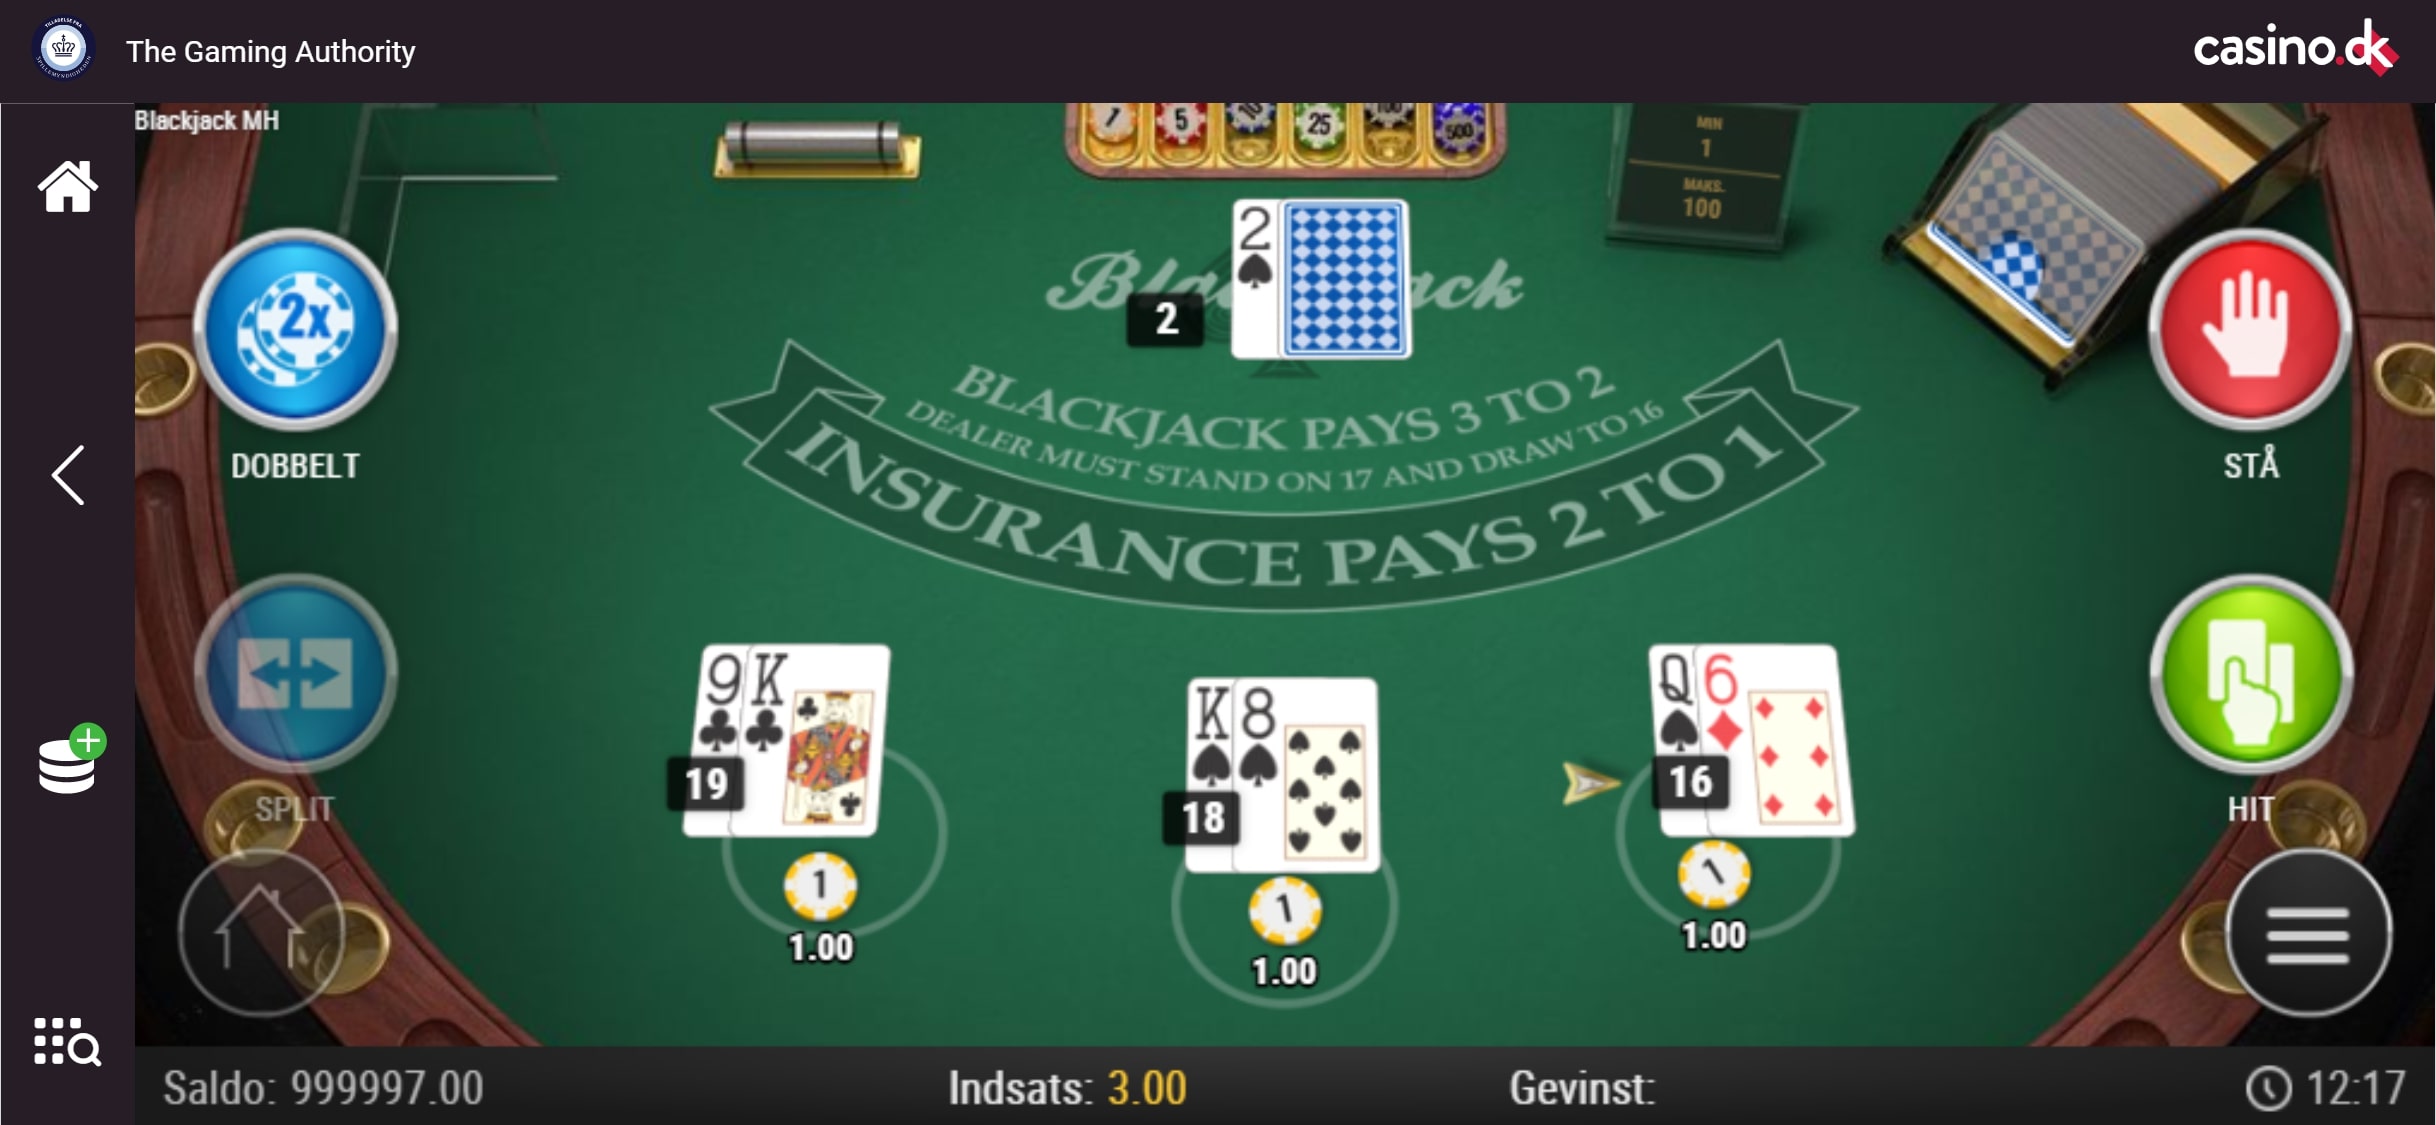 Casino DK Mobile Slots Review